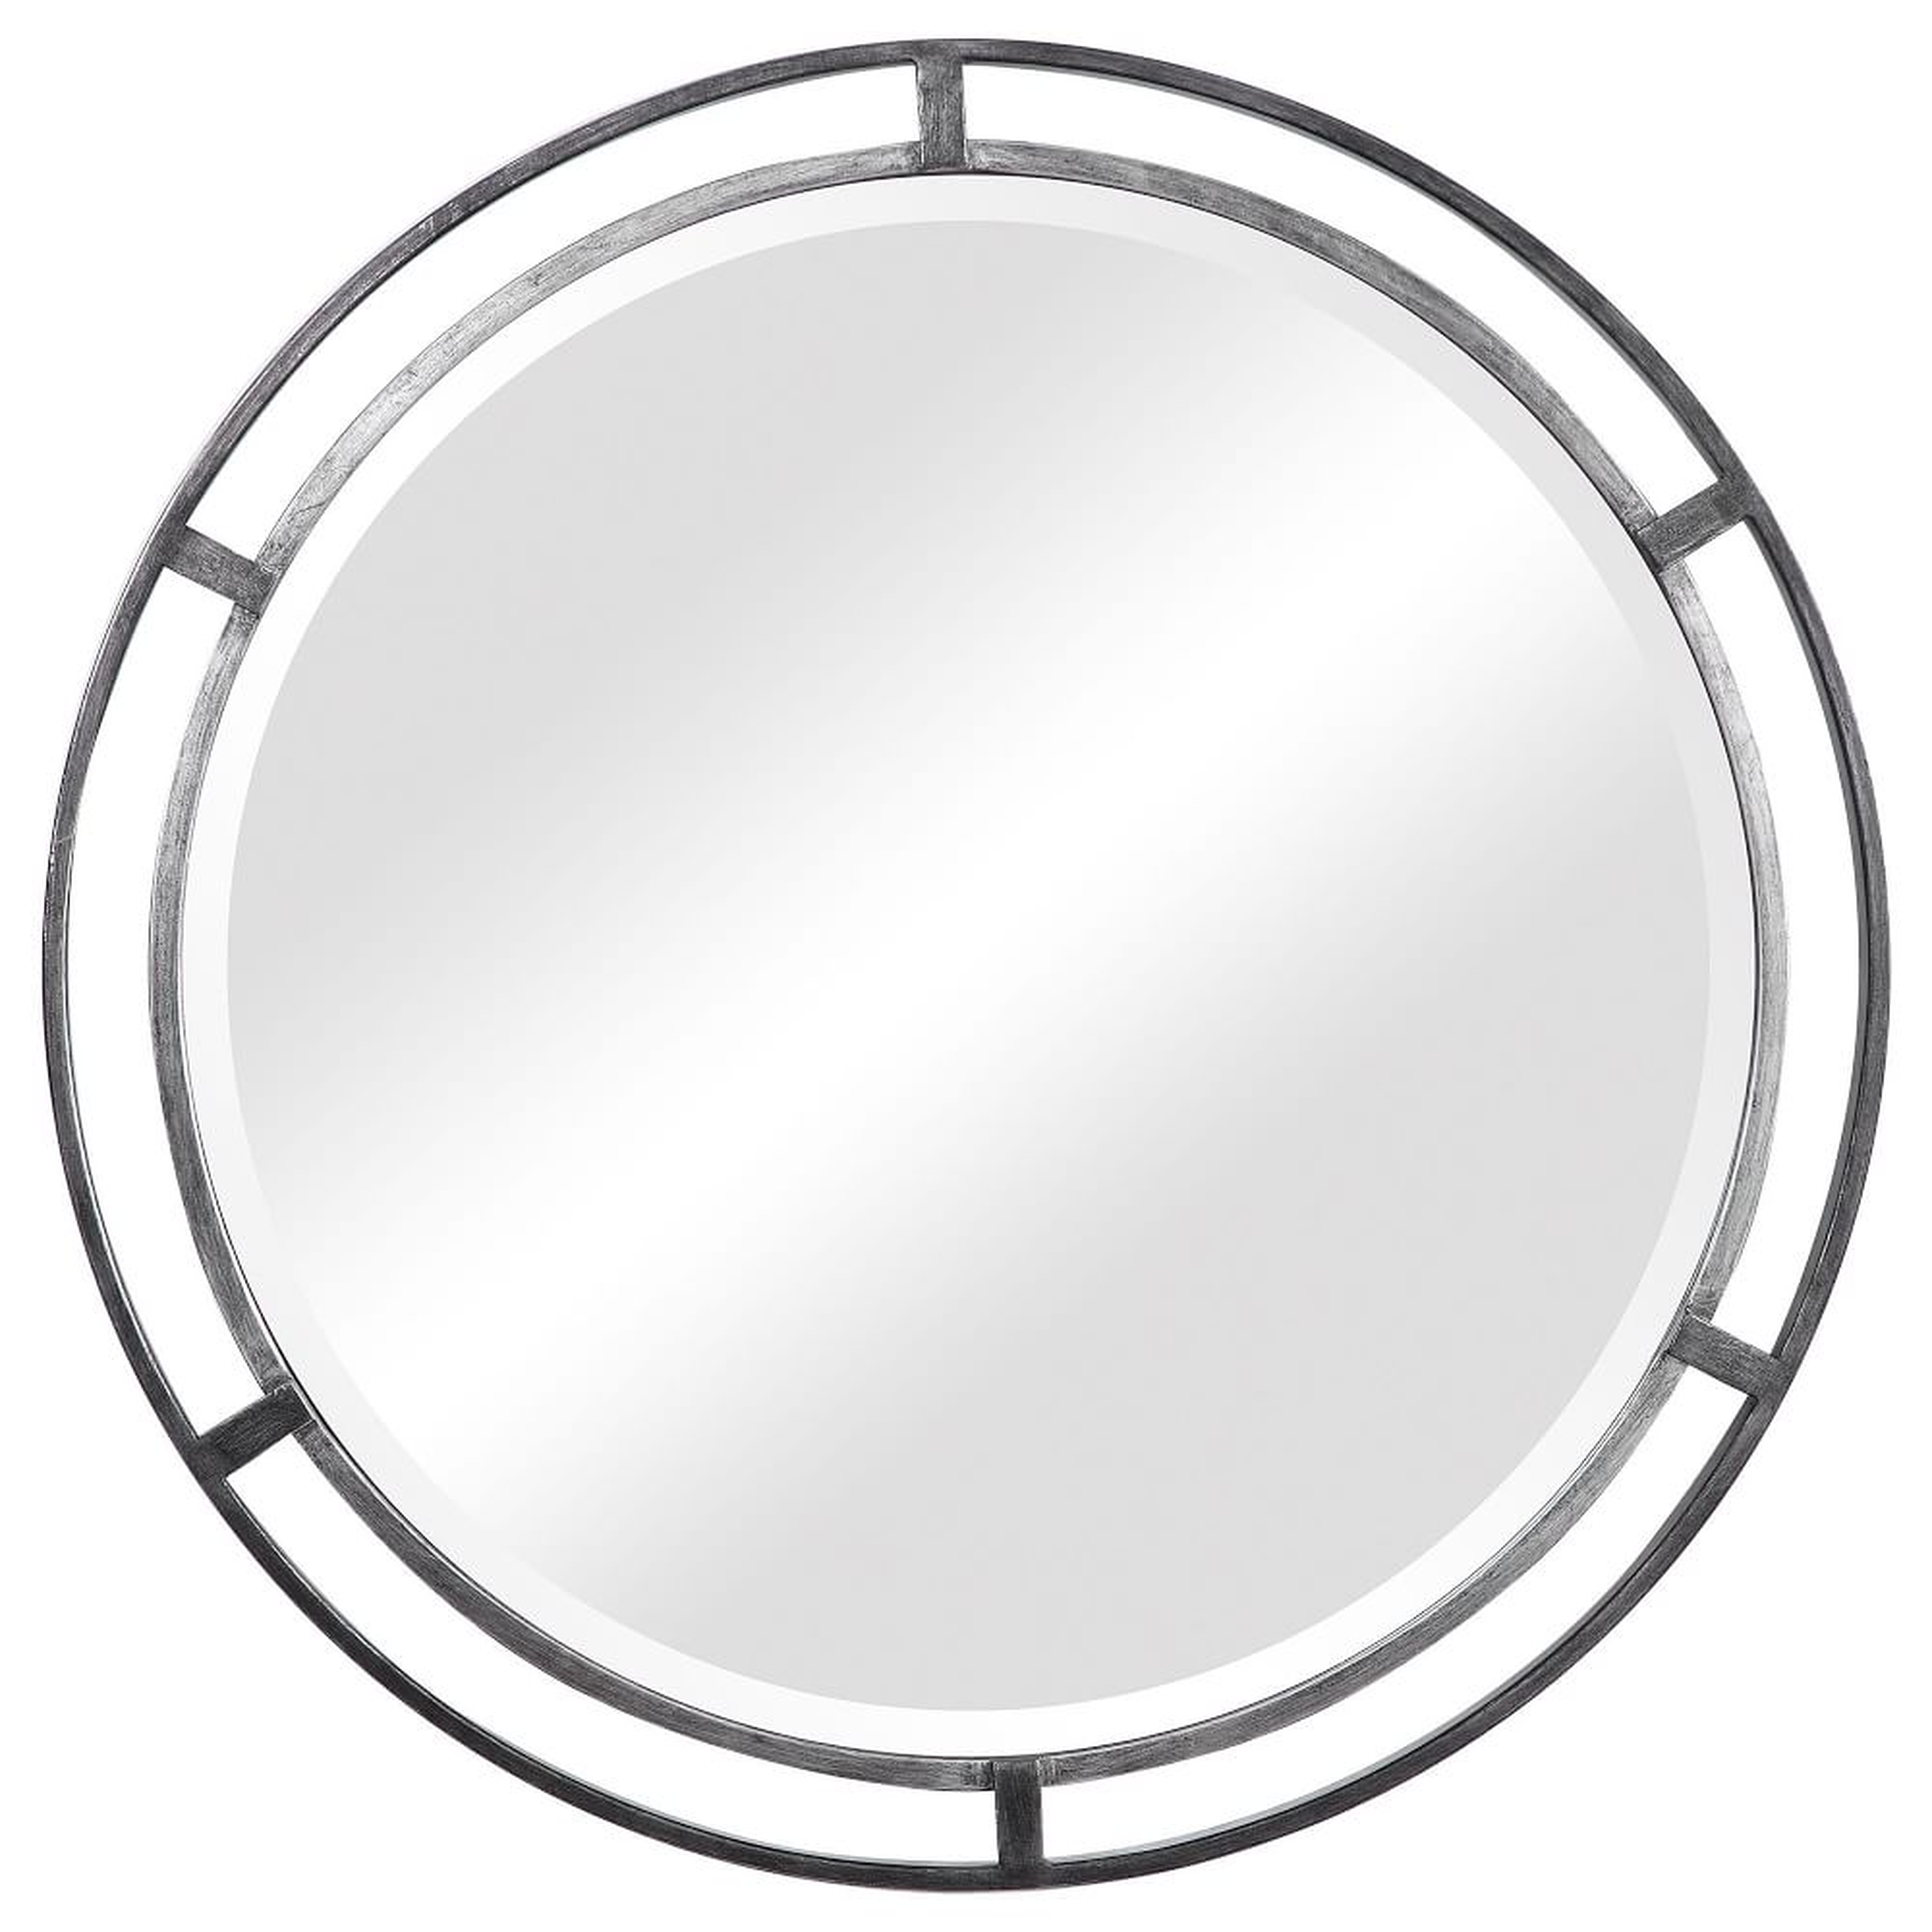 Floating Frame Round Mirror, Silver - West Elm